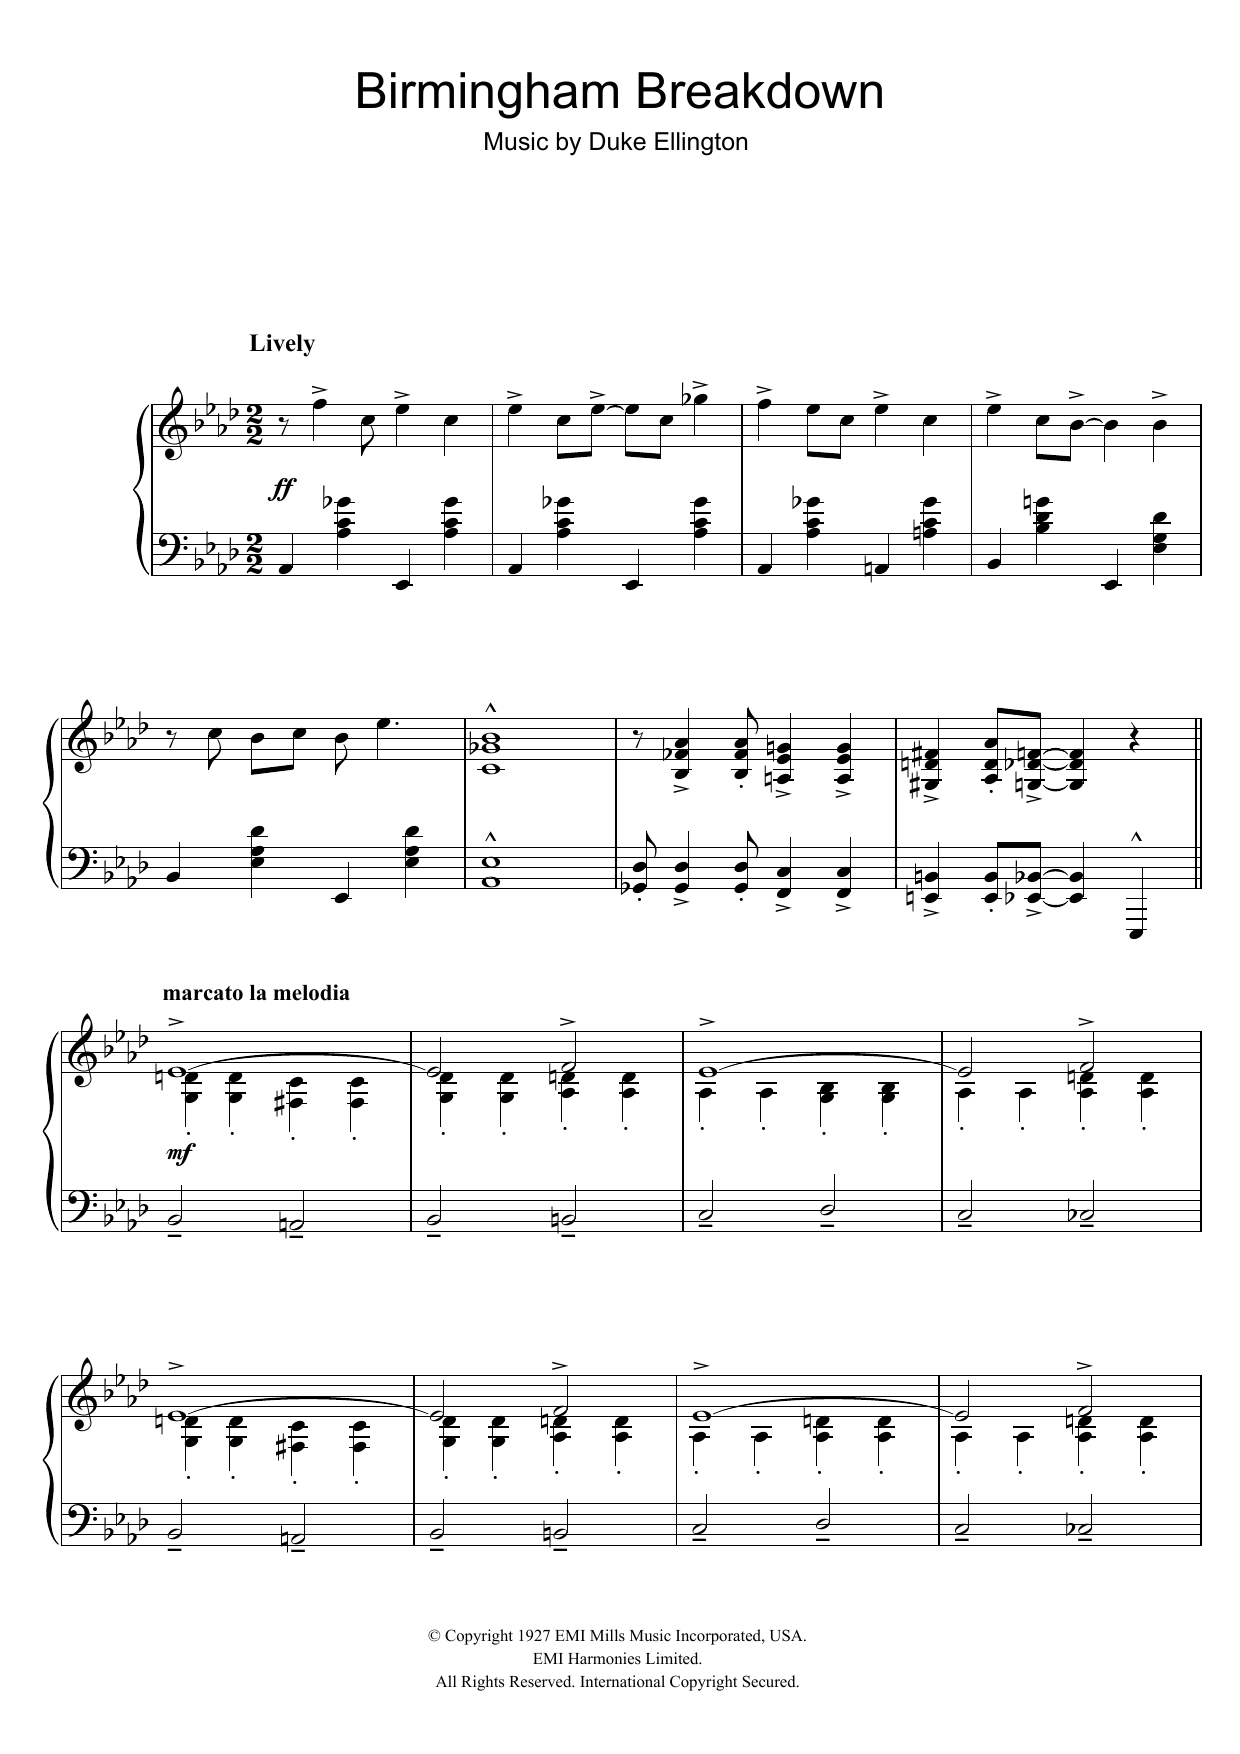 Duke Ellington Birmingham Breakdown Sheet Music Notes & Chords for Piano - Download or Print PDF